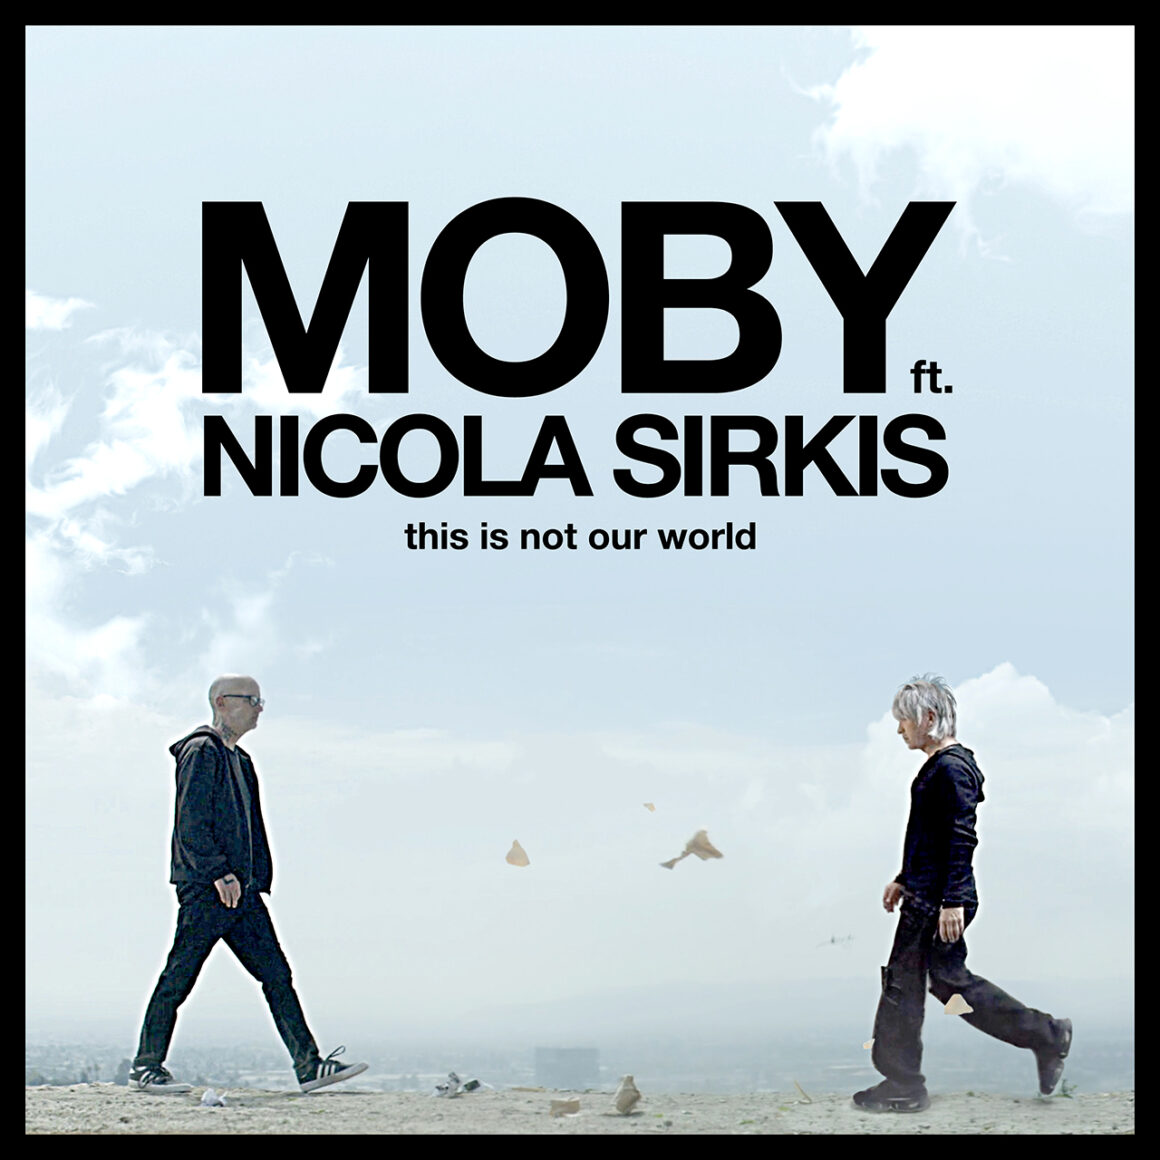 Moby ft. Nicola Sirkis, single artwork, @moby